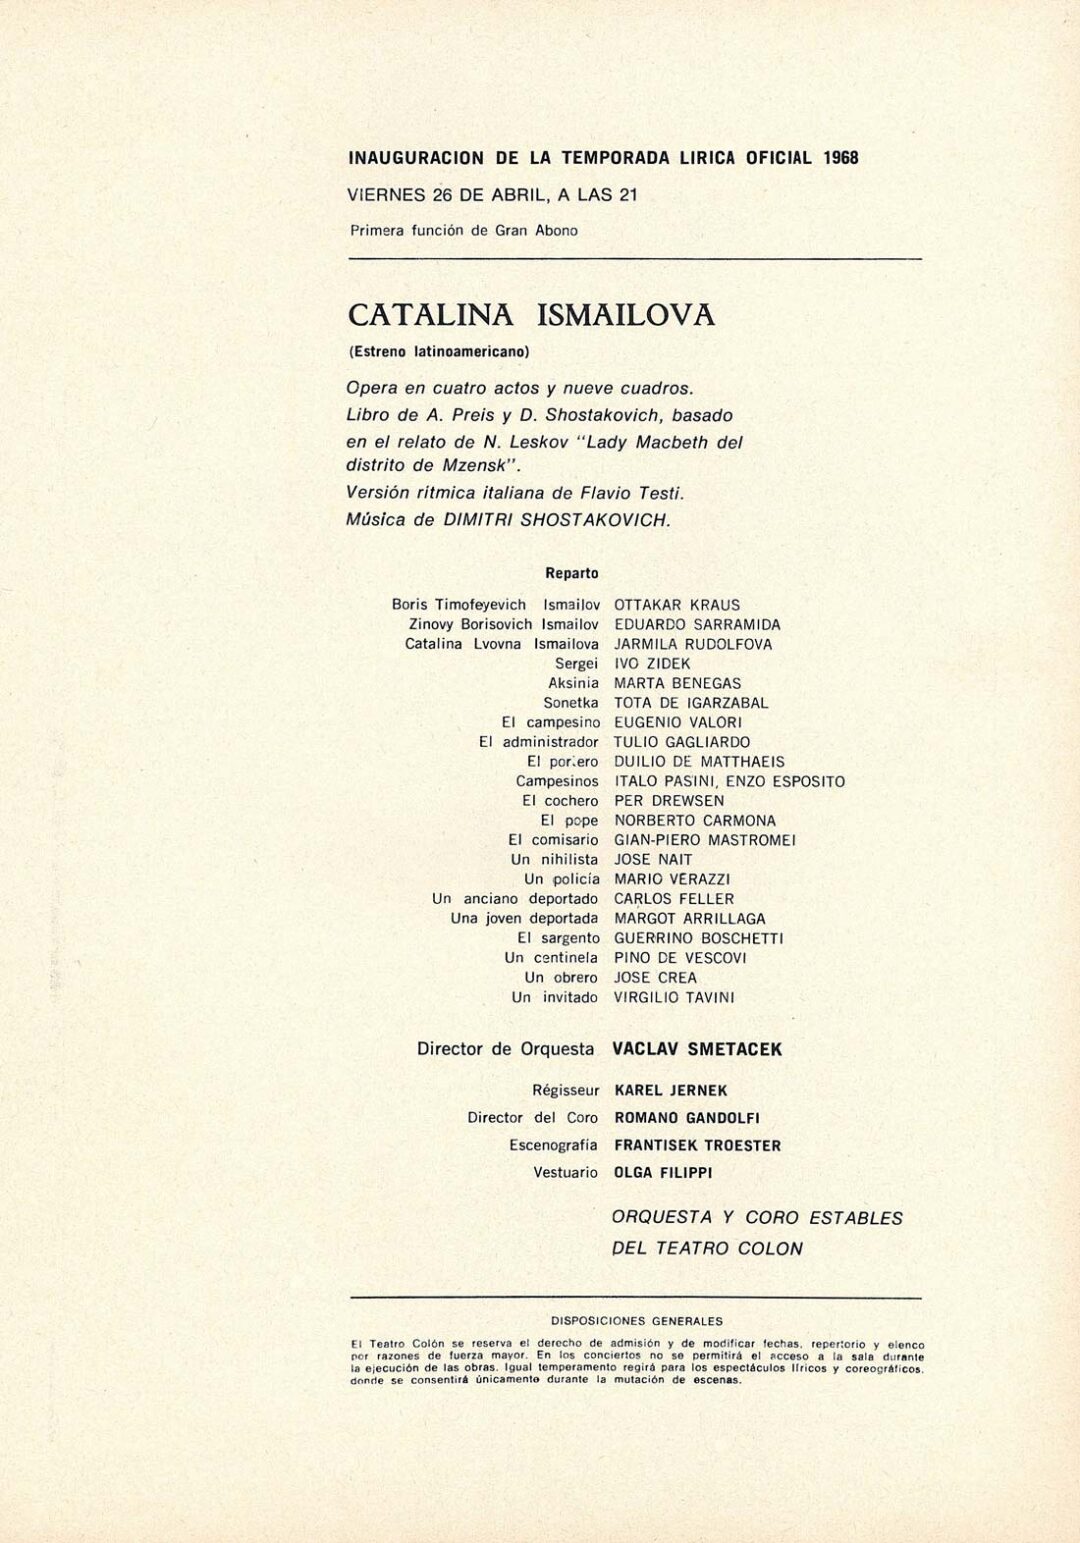 1968 │ Argentina, Buenos Aires, Teatro Colón, Katěrina Izmailova